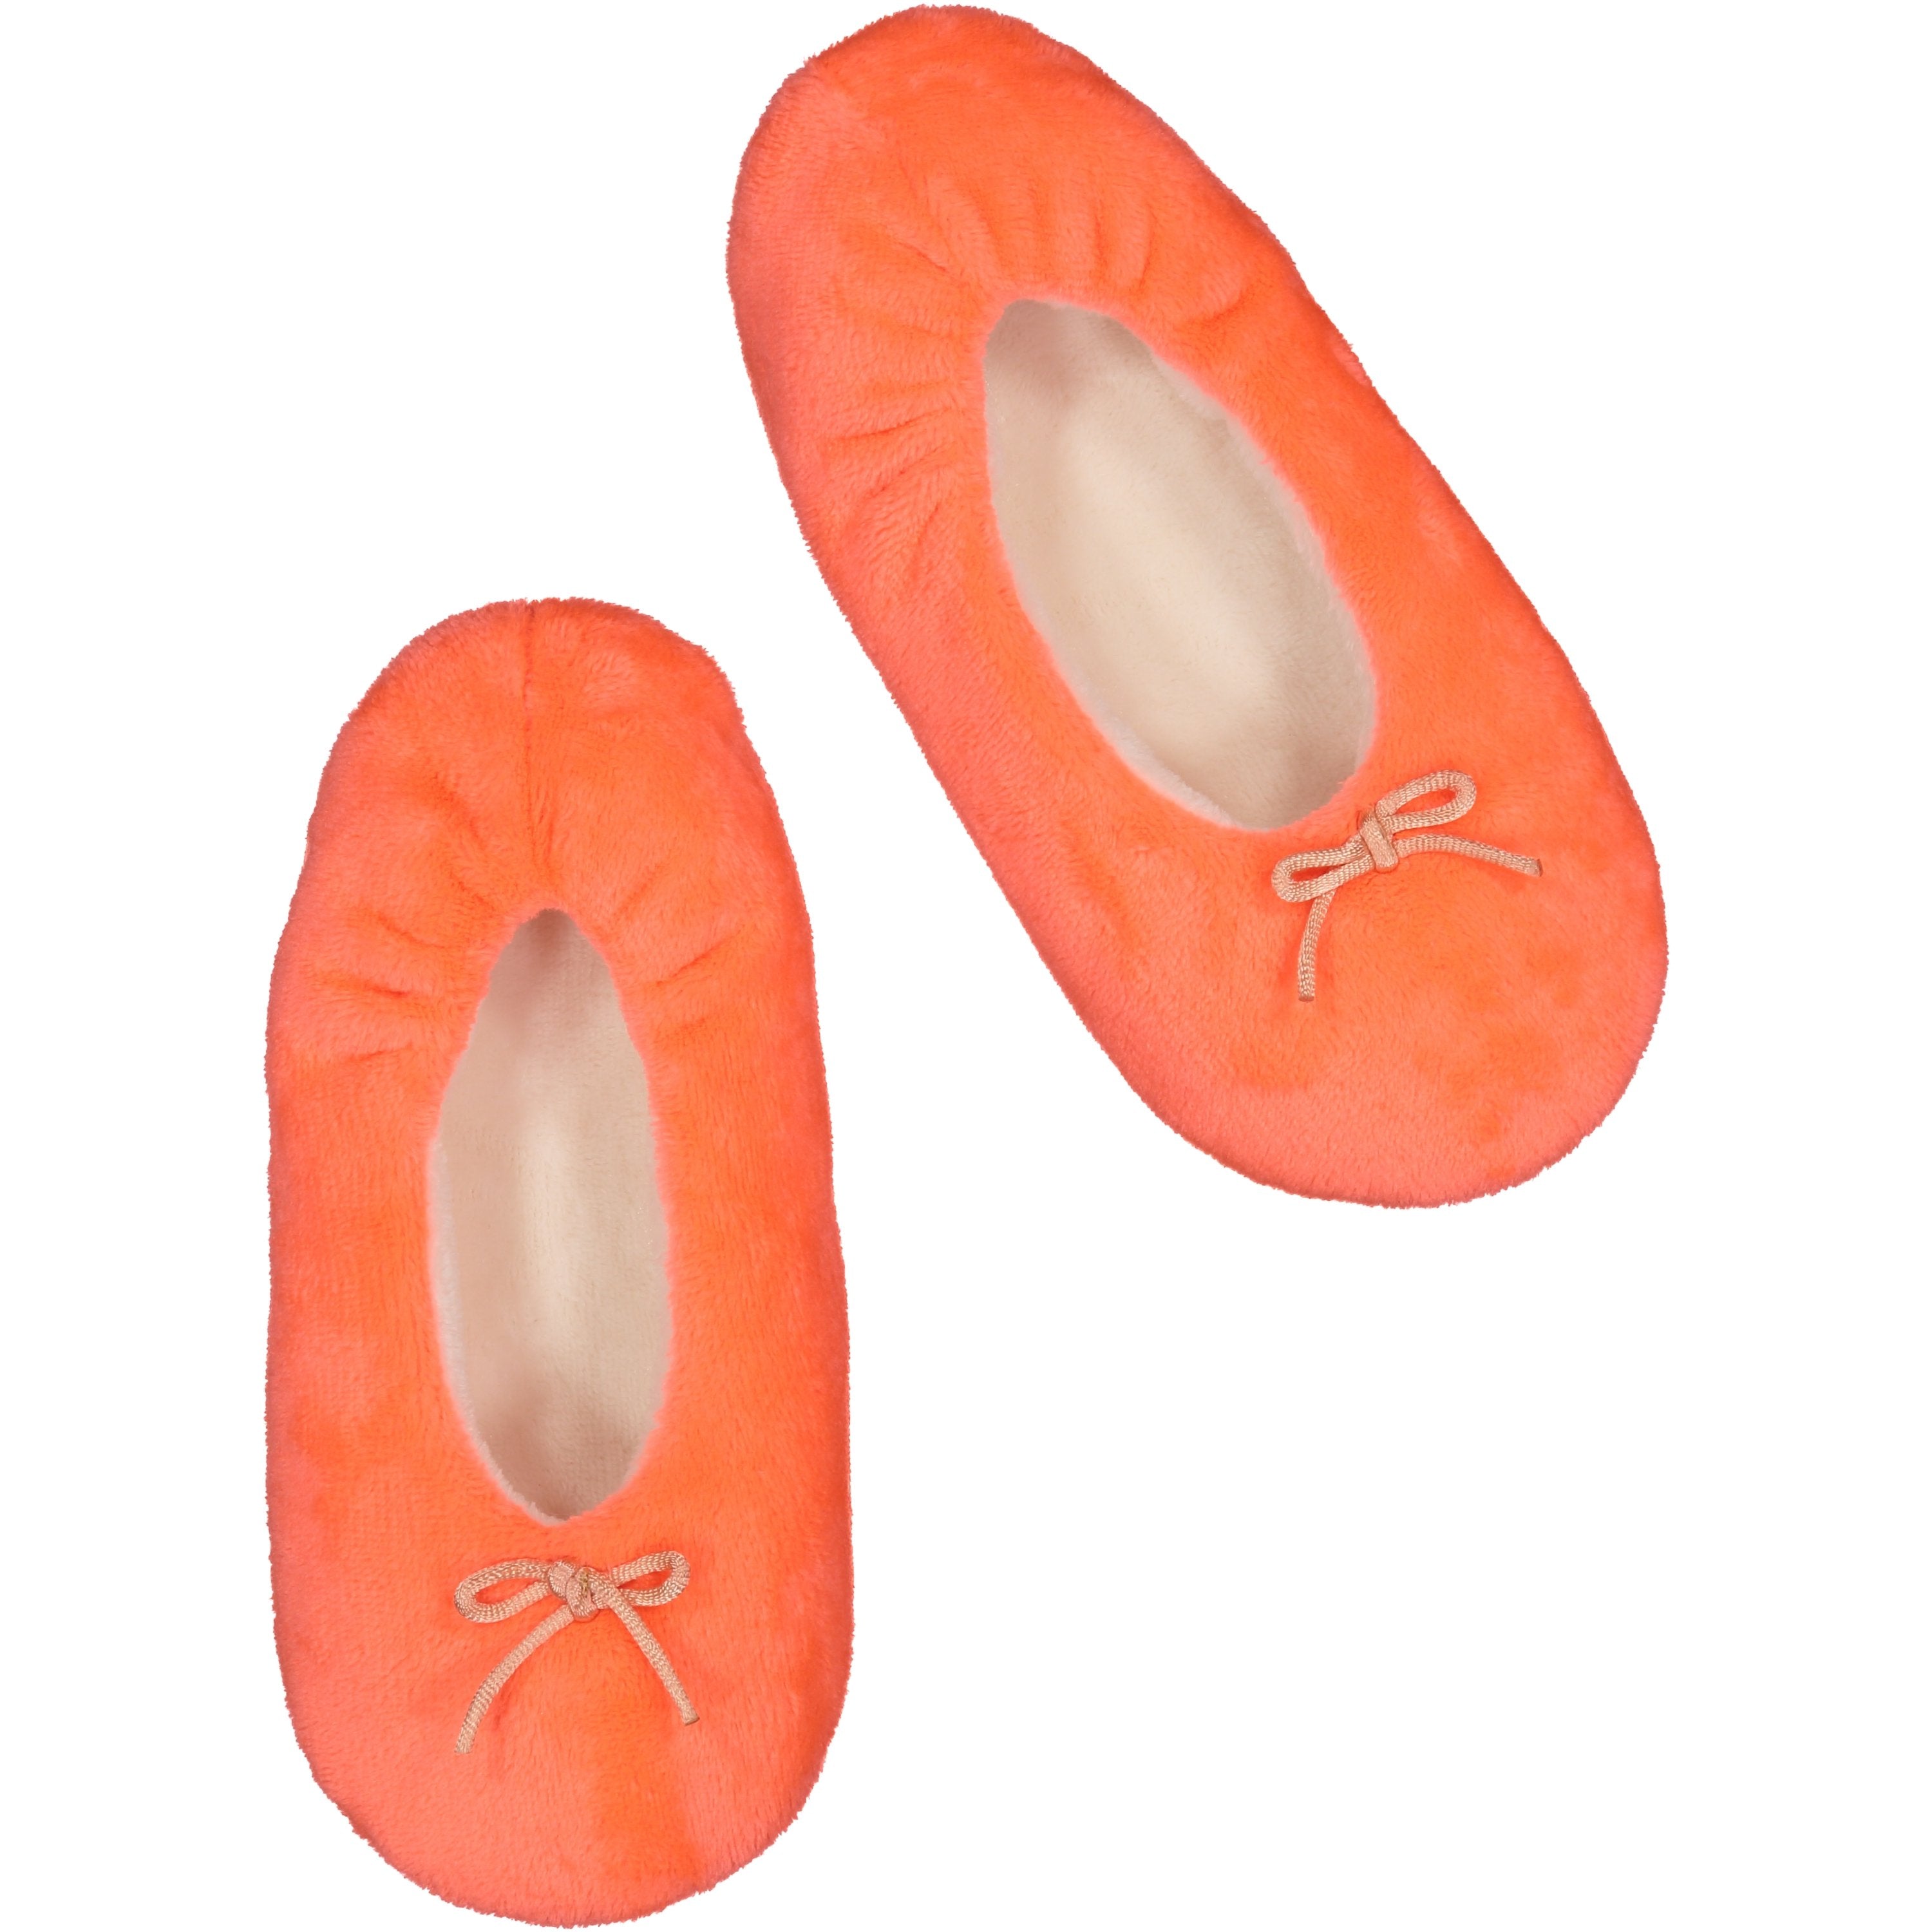 orange fuzzy slippers